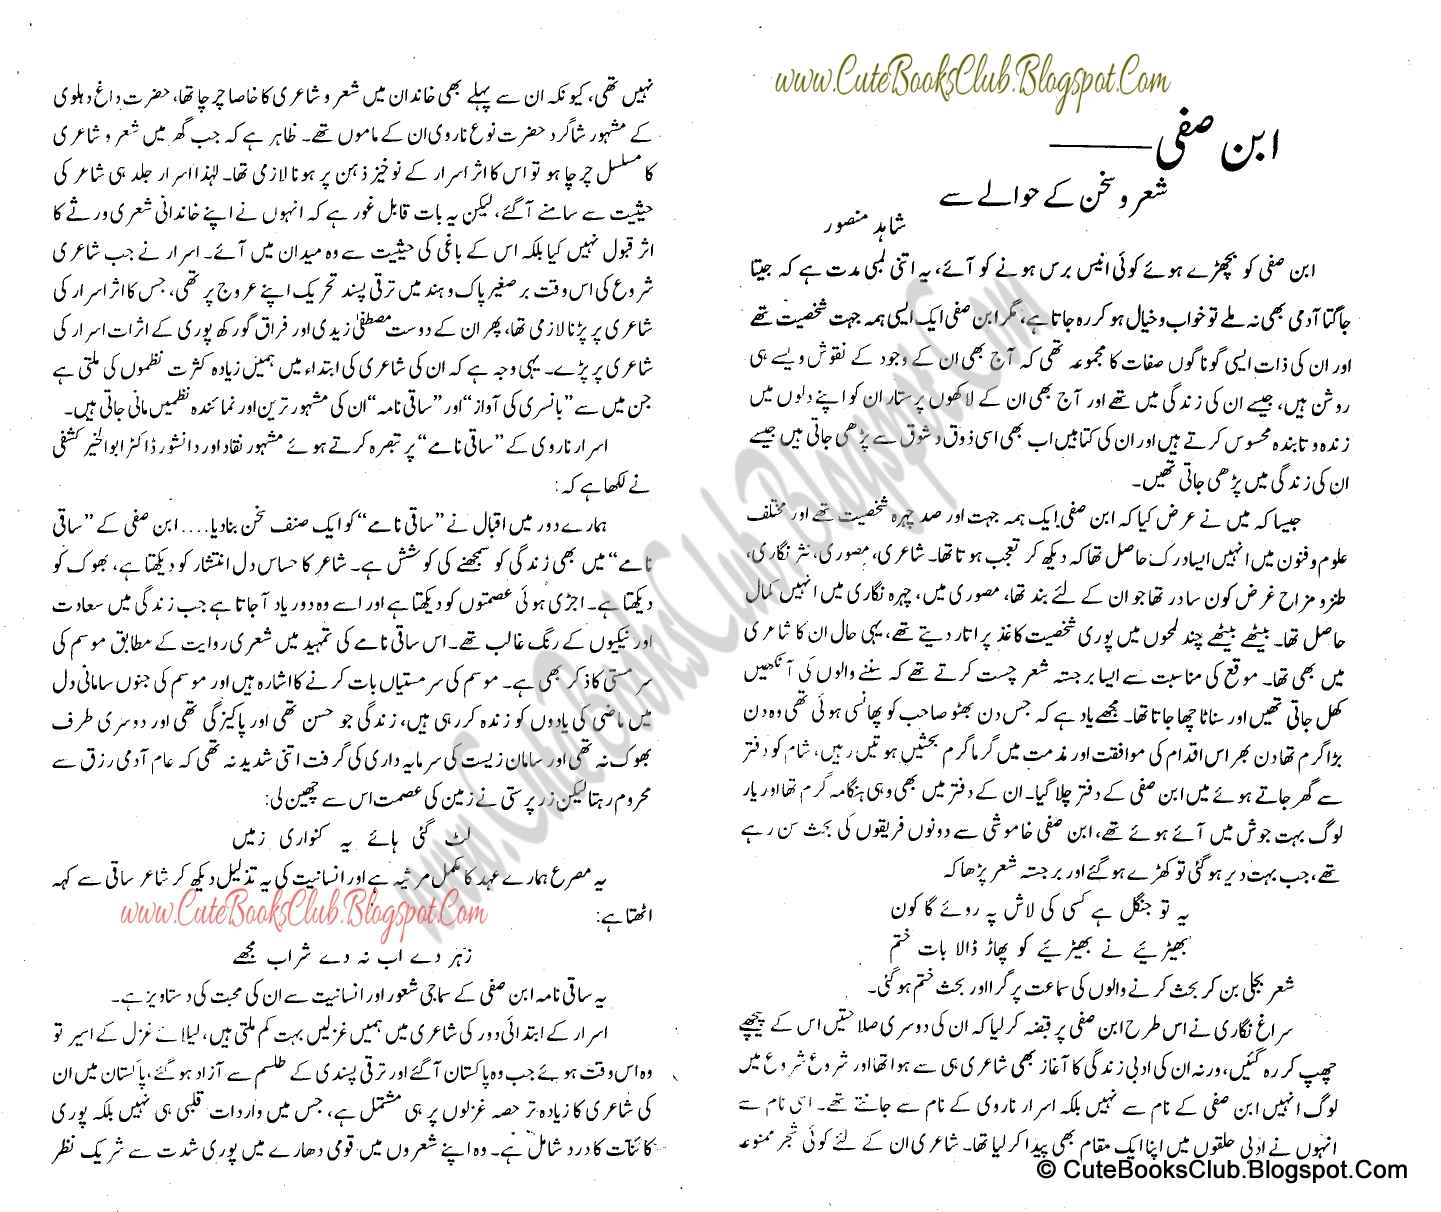 063-Ashtray House, Imran Series By Ibne Safi (Urdu Novel)